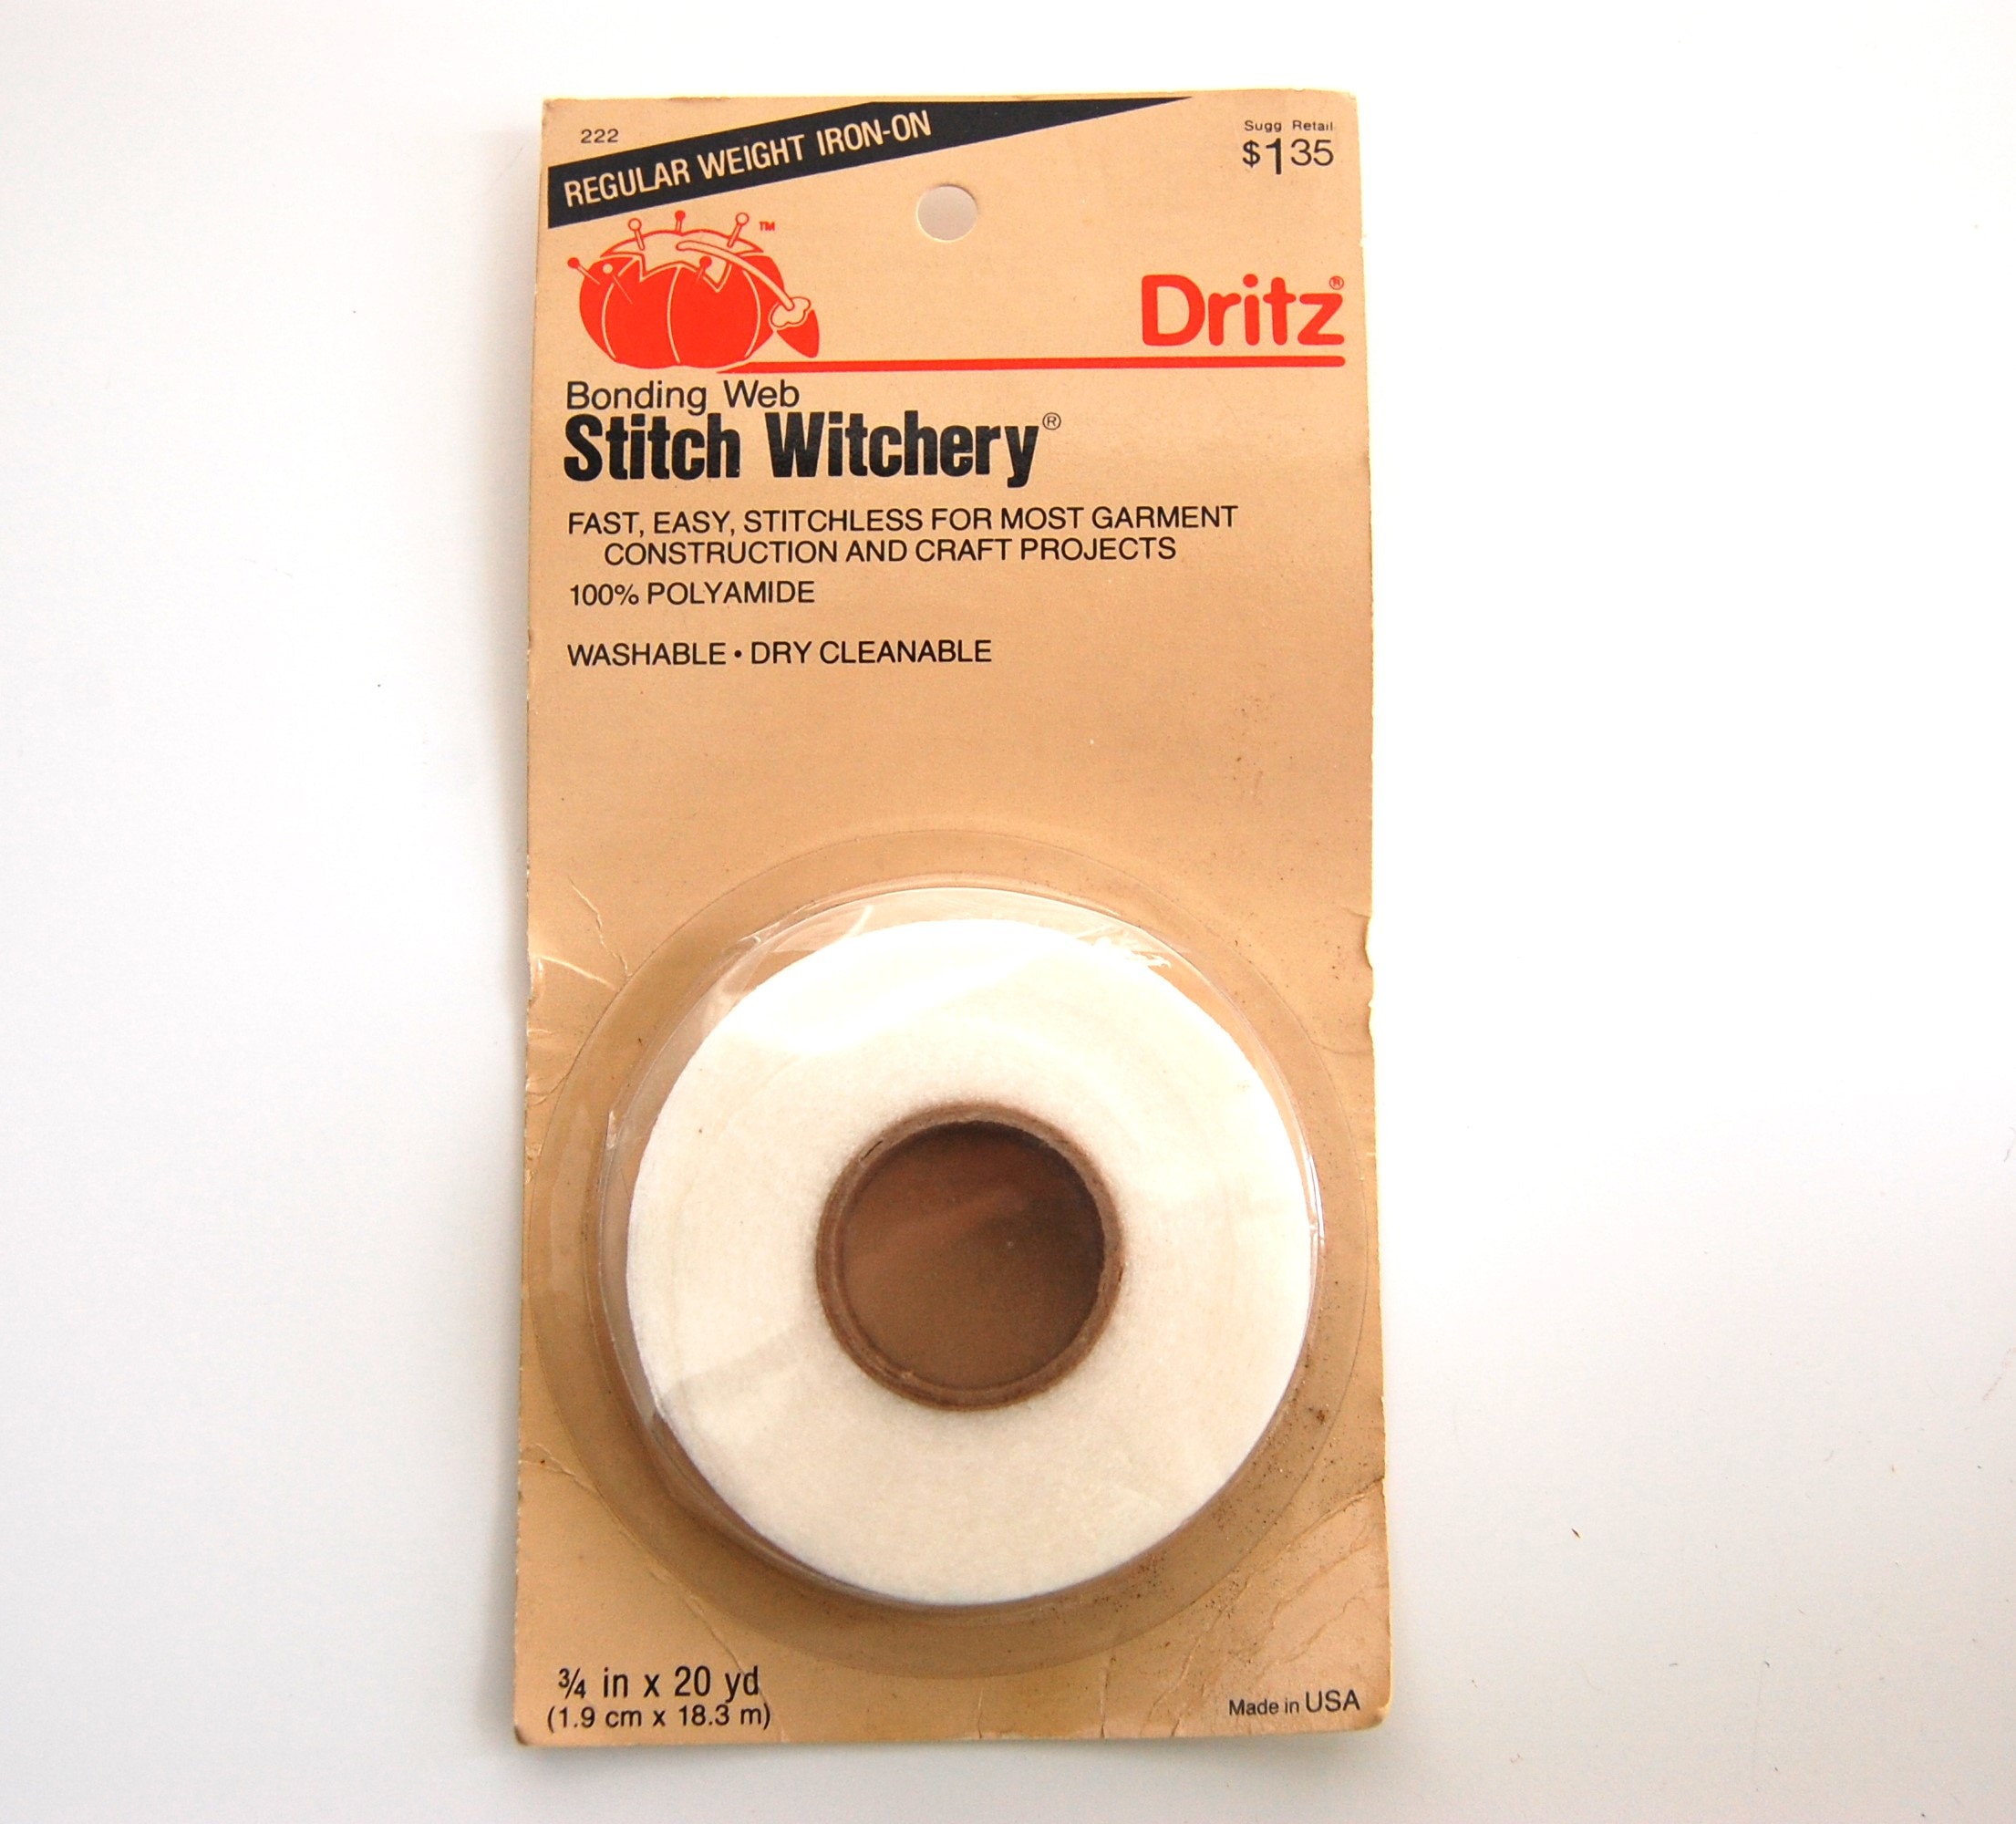 Dritz Stitch Witchery Bonding Web, Super Weight, 5/8 x 13 yd